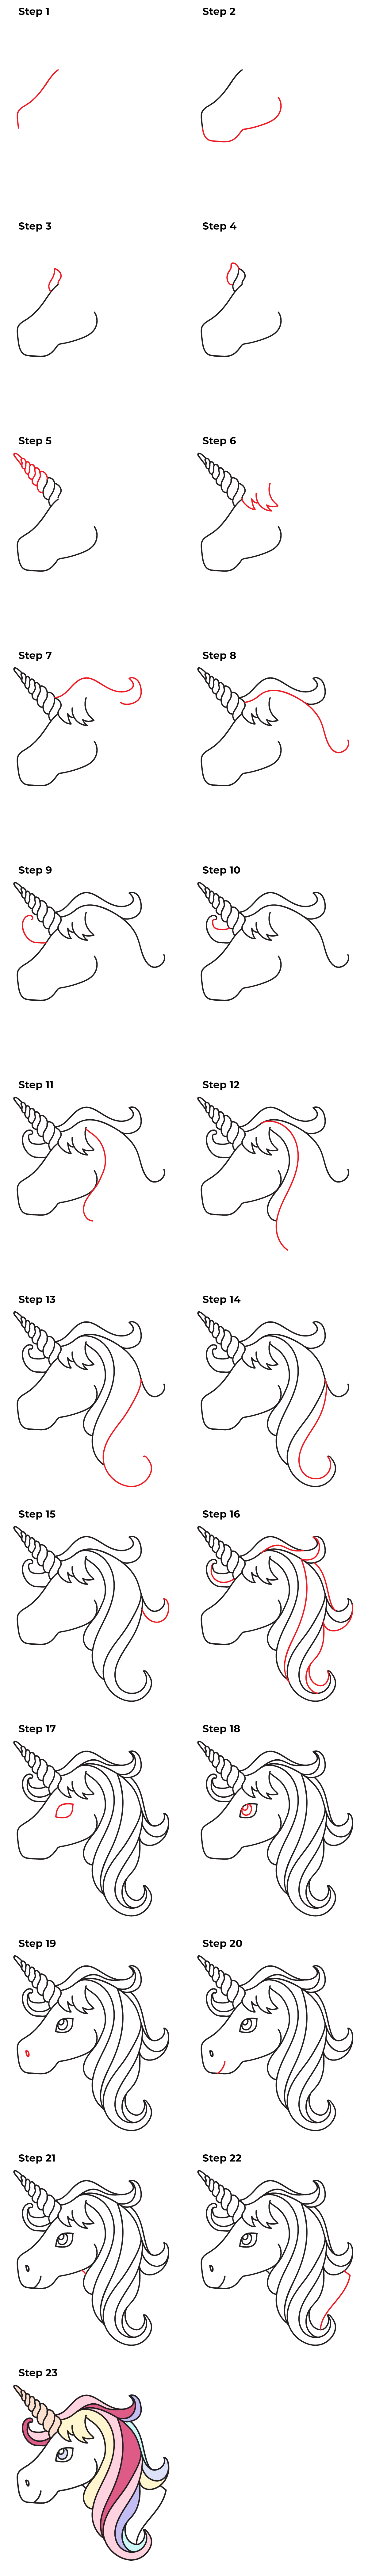 unicorn head drawing